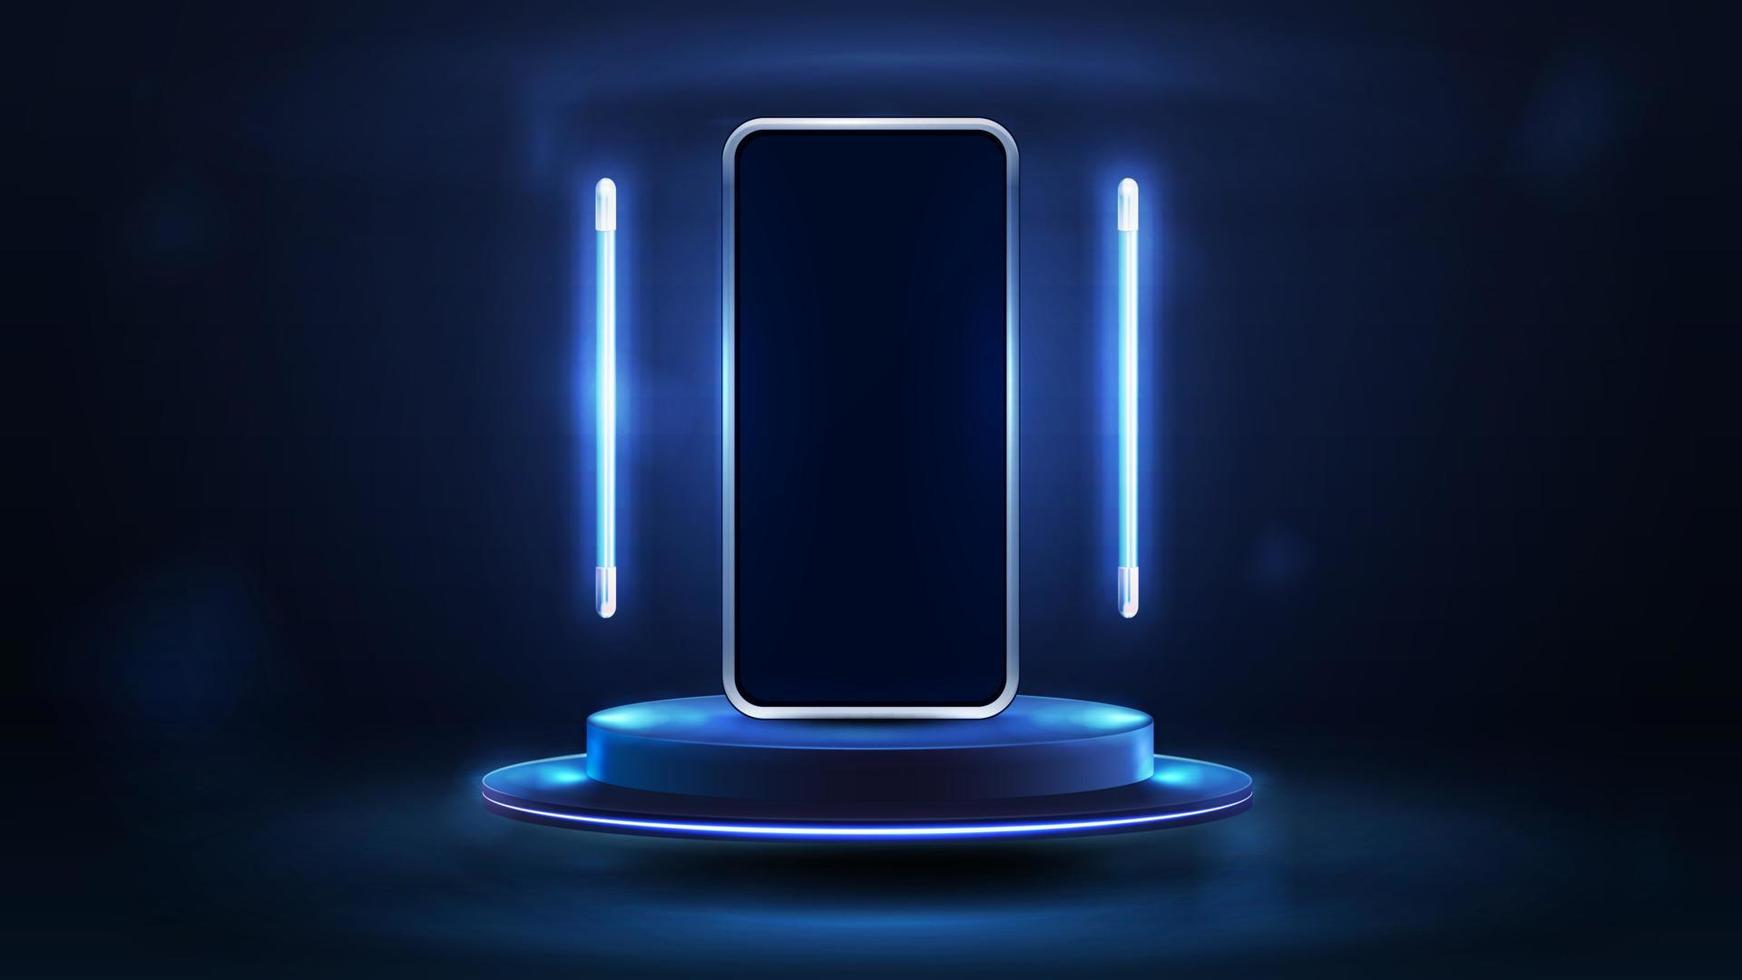 smartphone på blå podium flytande i de luft i mörk scen med blå flygande linje lampor runt om, 3d realistisk vektor illustration.